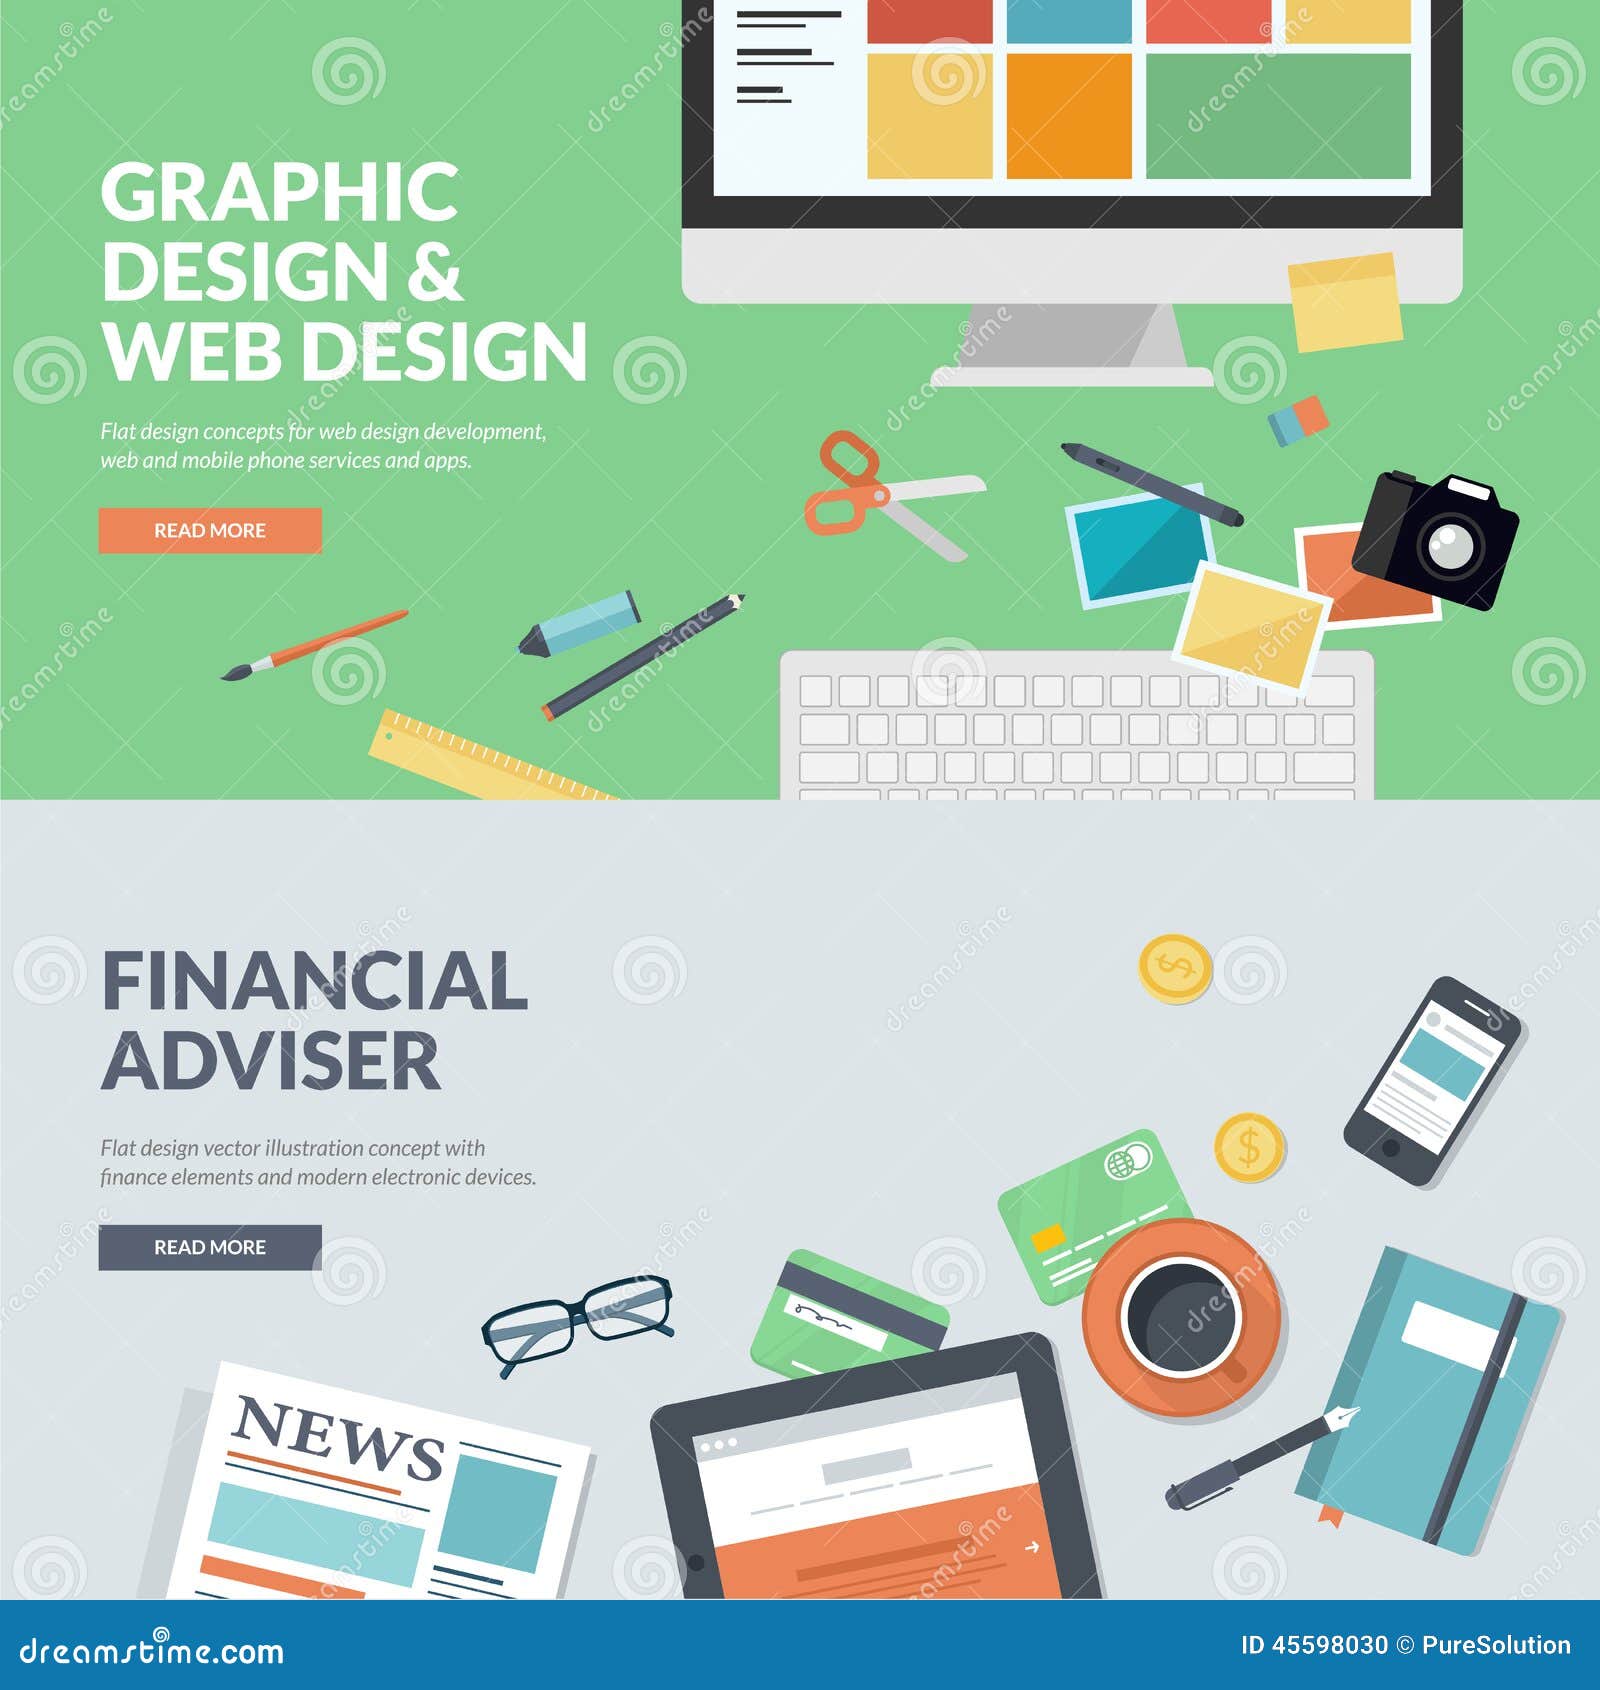 flat-design-vector-illustration-concepts-web-design-finance-graphic-development-financial-adviser-45598030.jpg